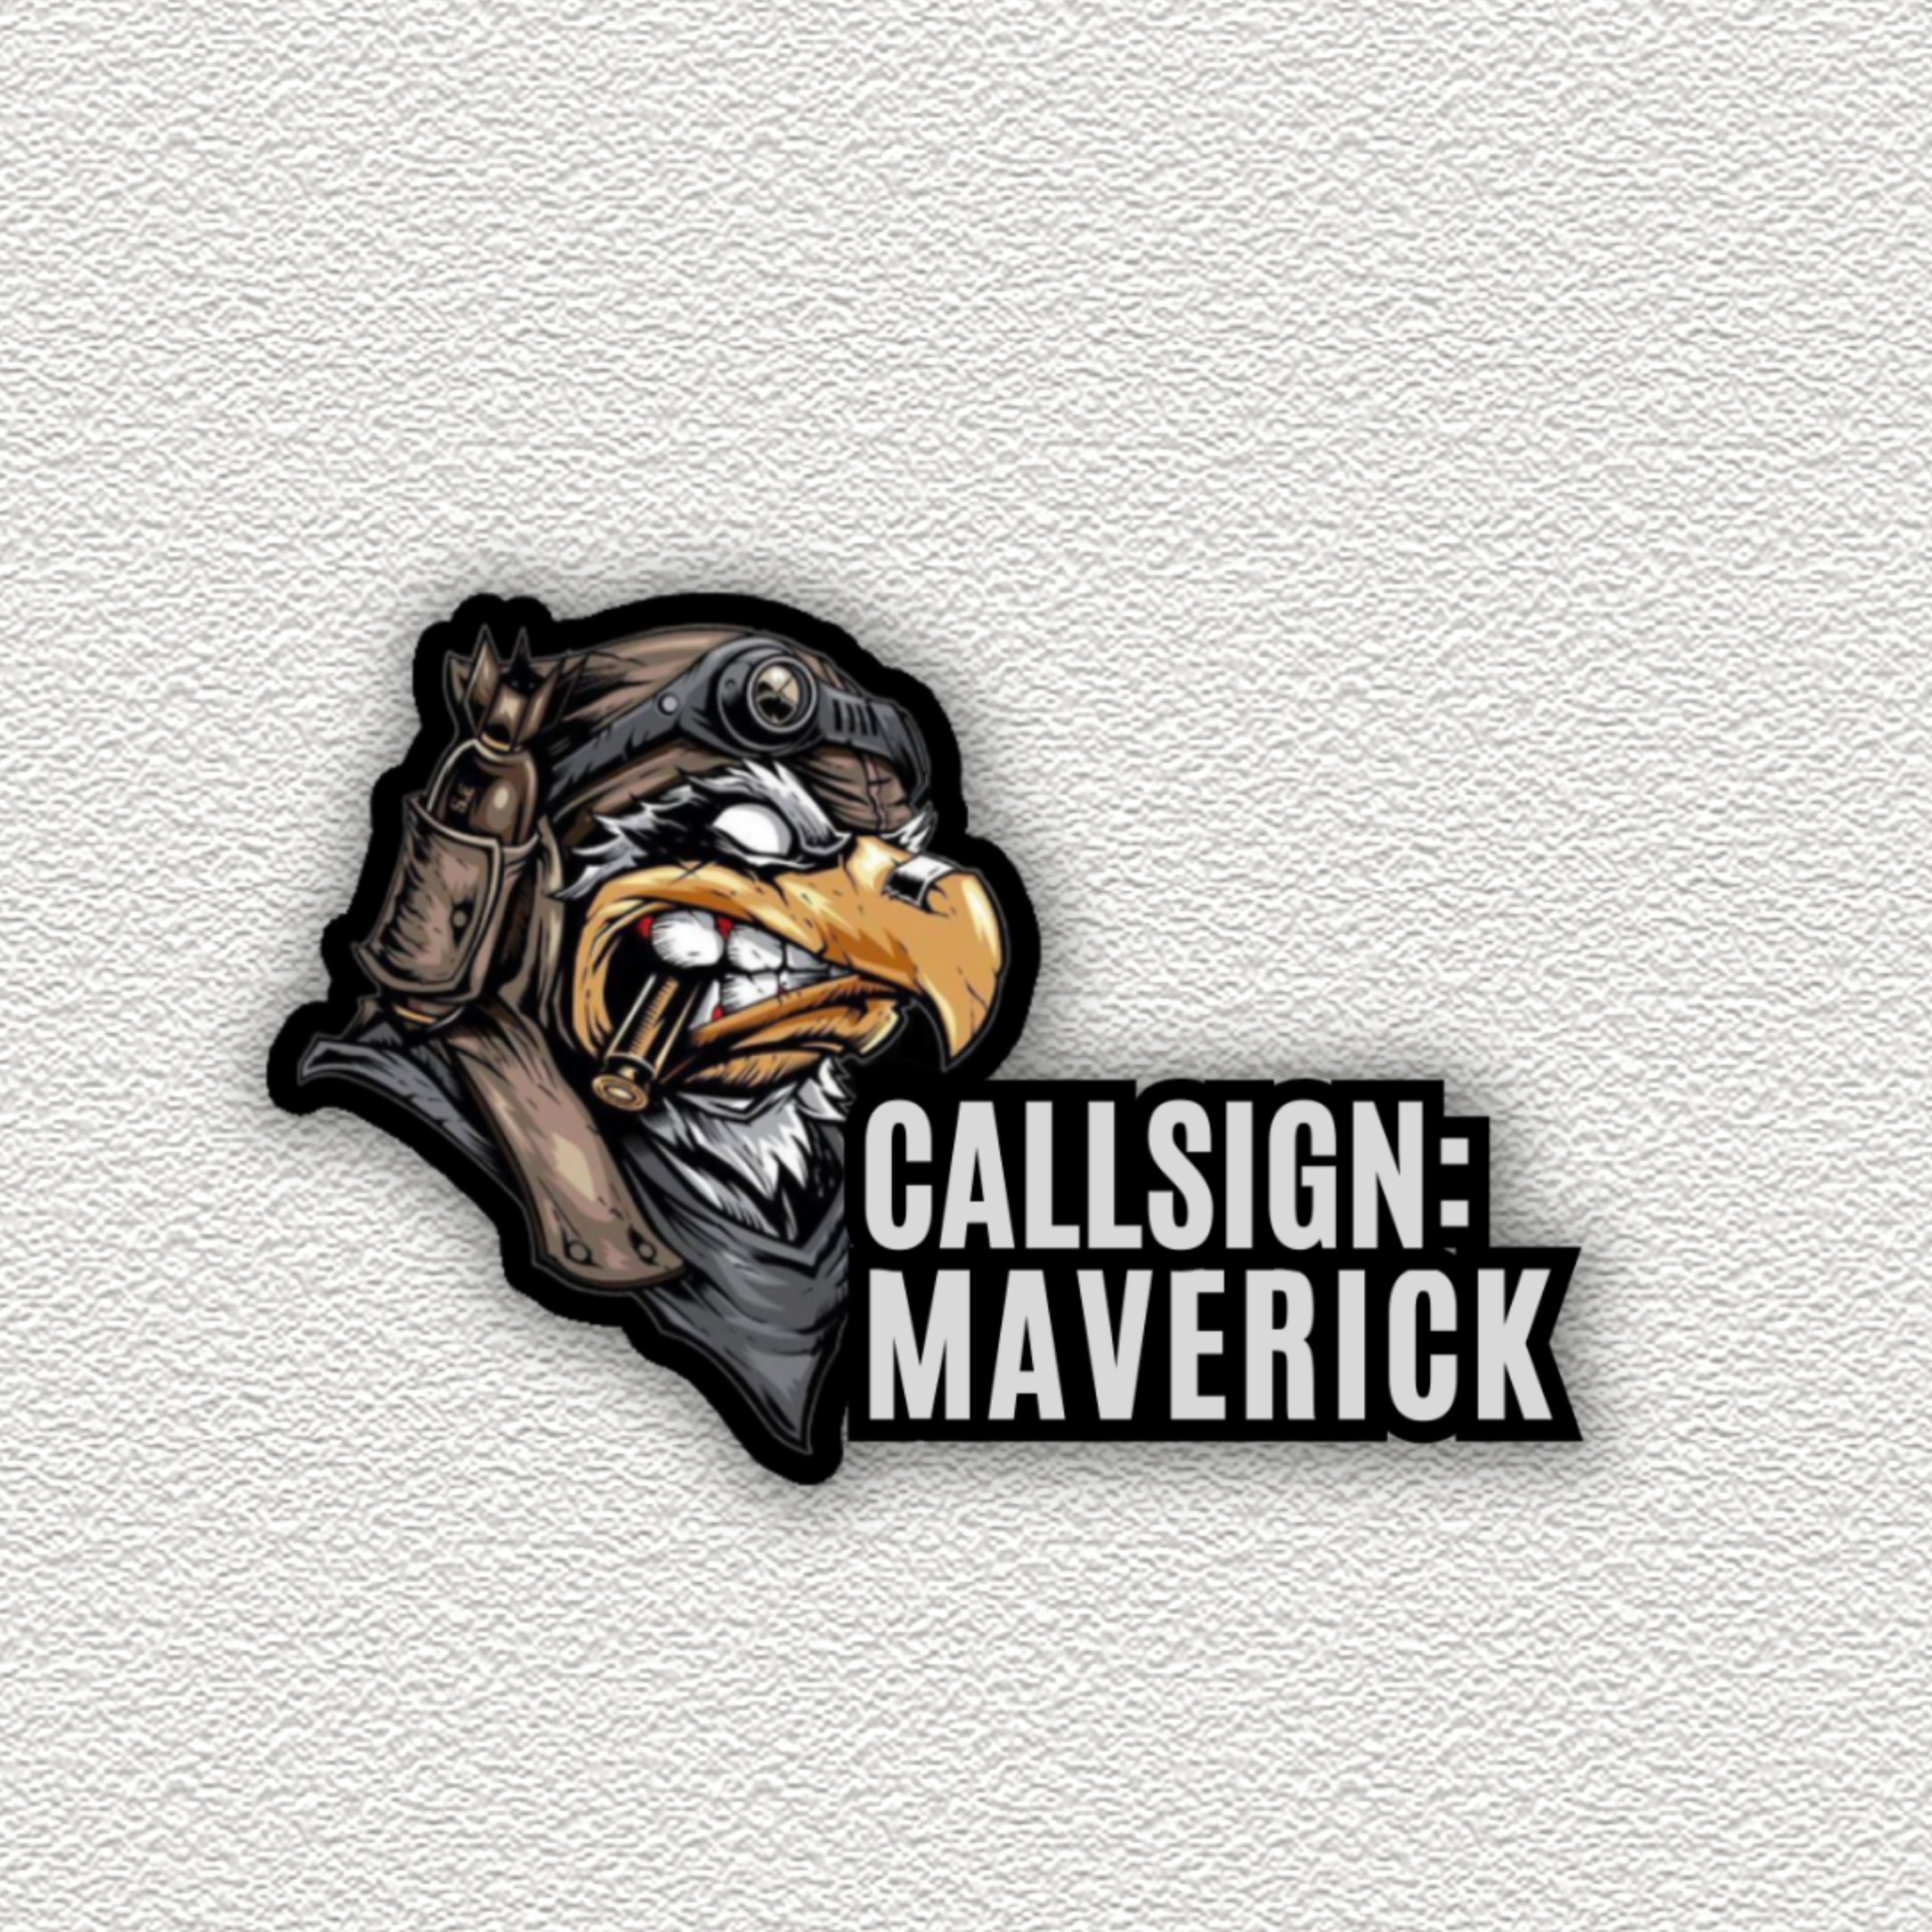 Top Gun Maverick likeness logo sticker | eBay